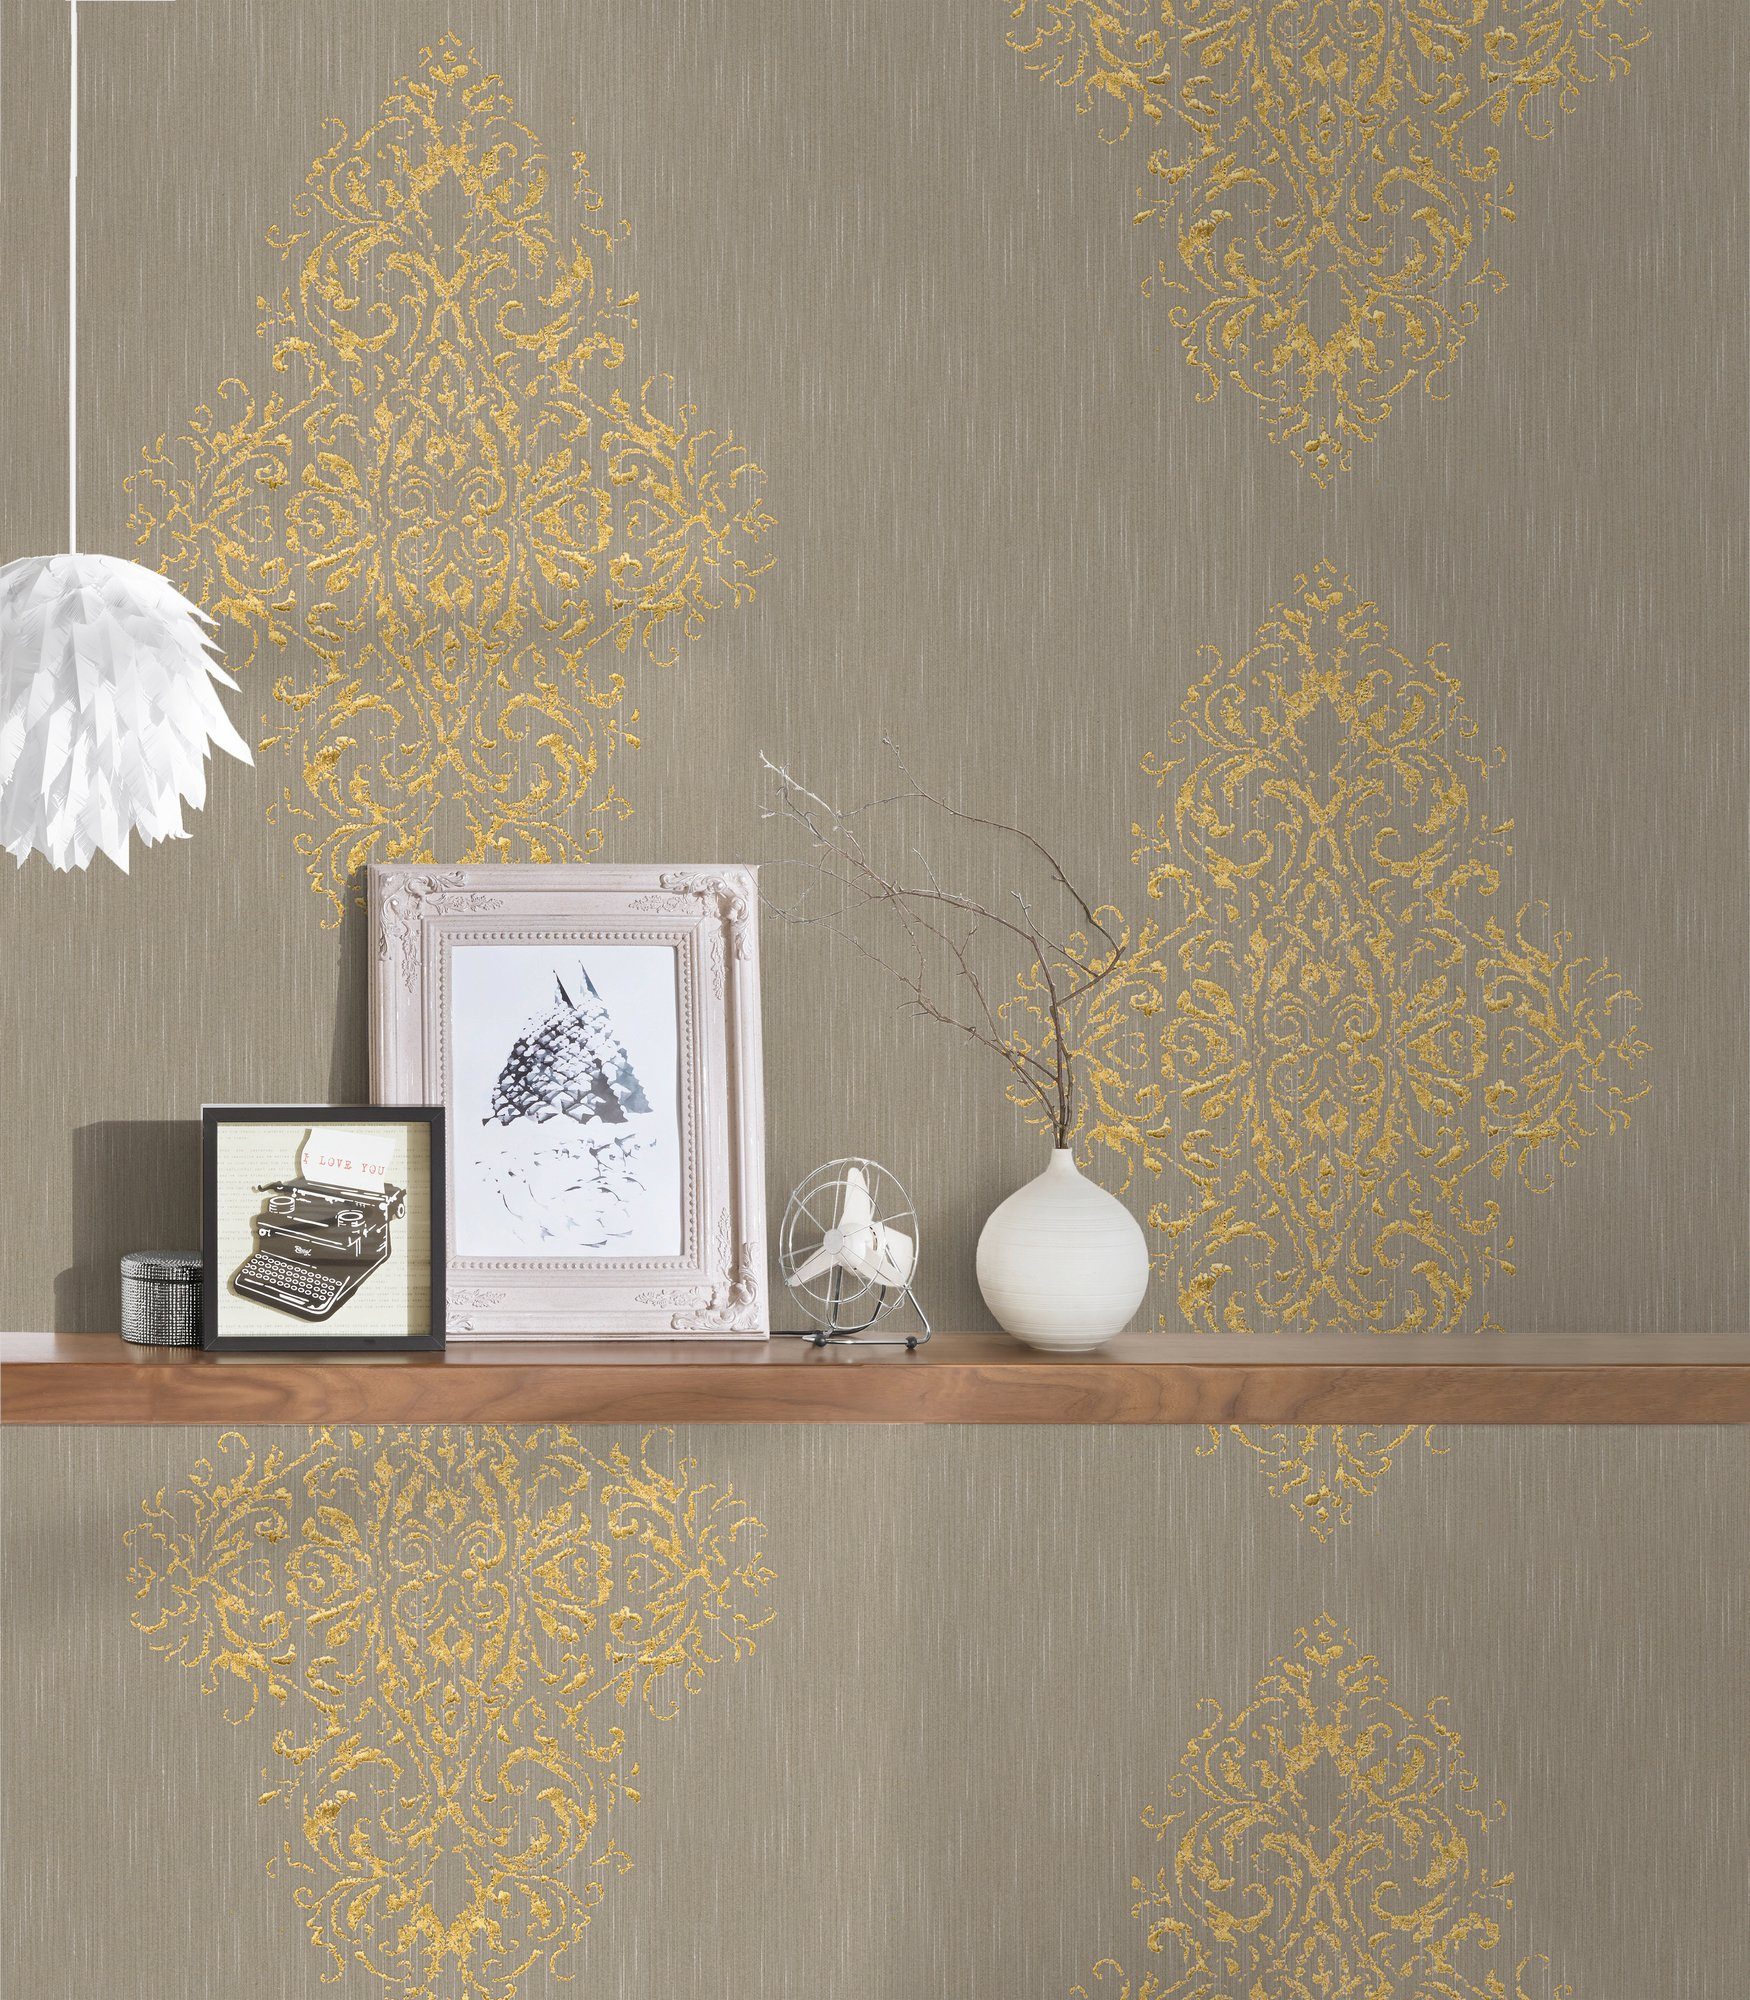 Effekt Textil Barock wallpaper, Luxury Metallic Tapete Textiltapete Barock, samtig, Architects beige/gold Paper